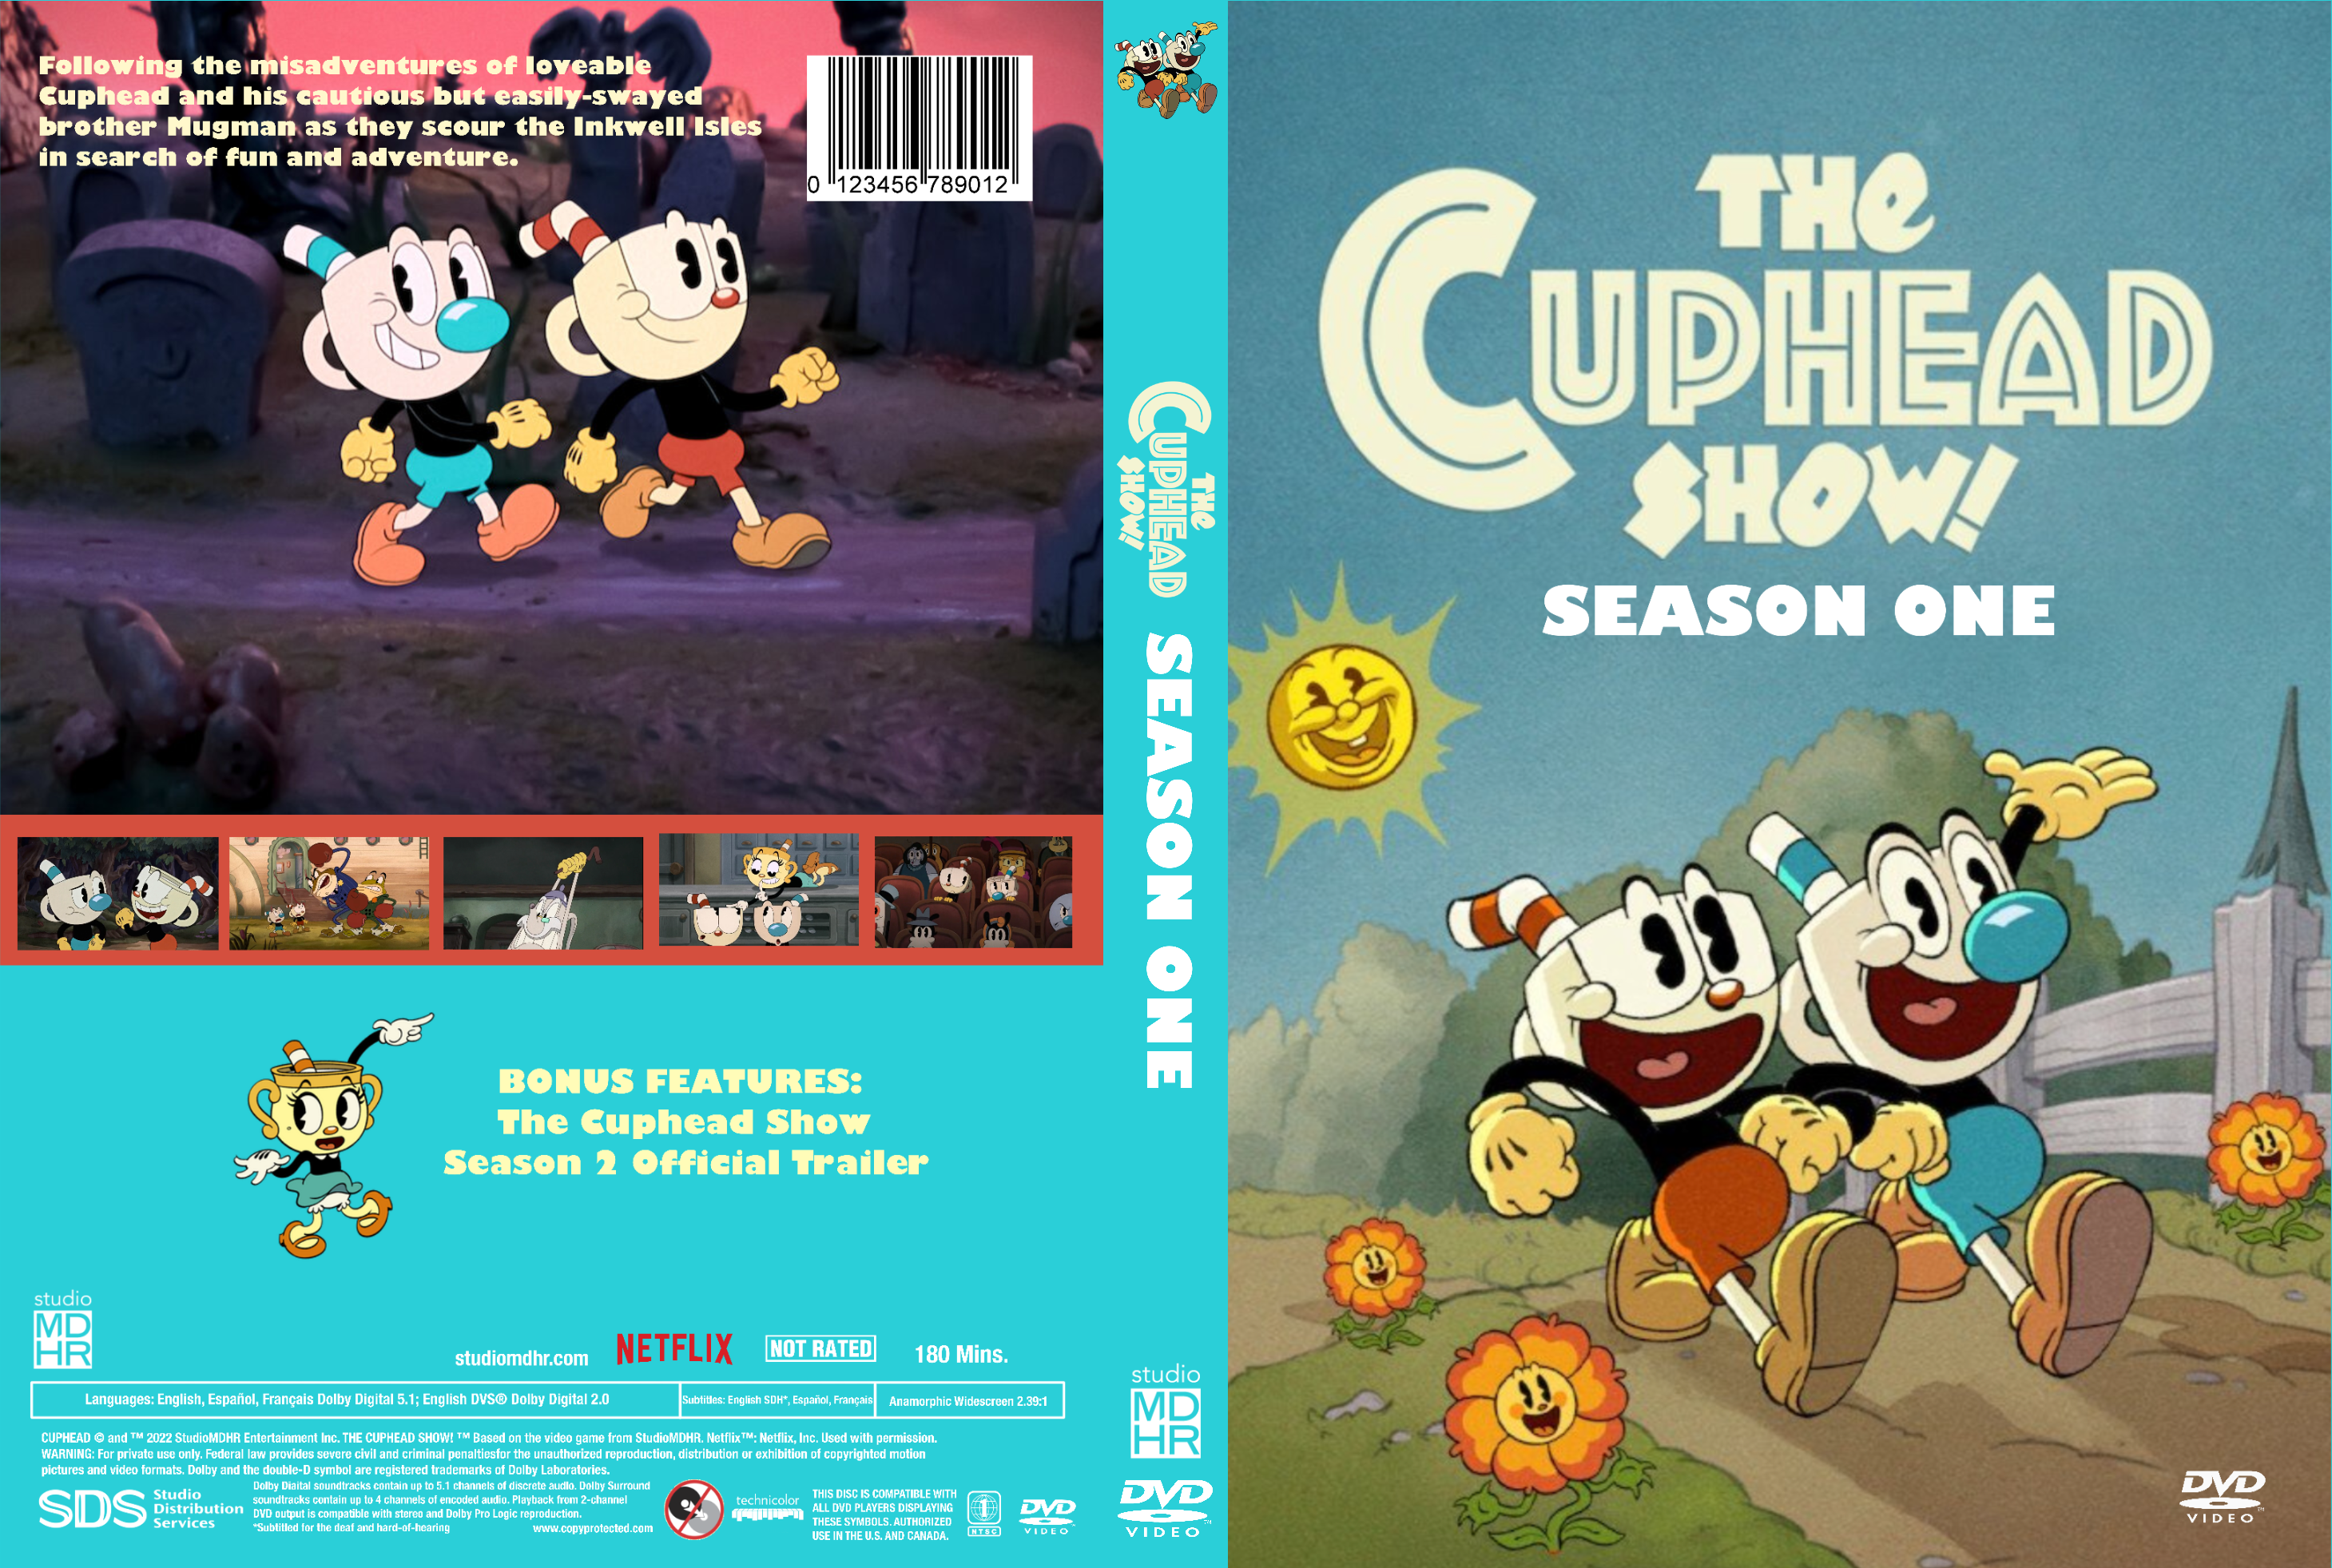 The Cuphead Show! Season 4 Release Date, Trailer